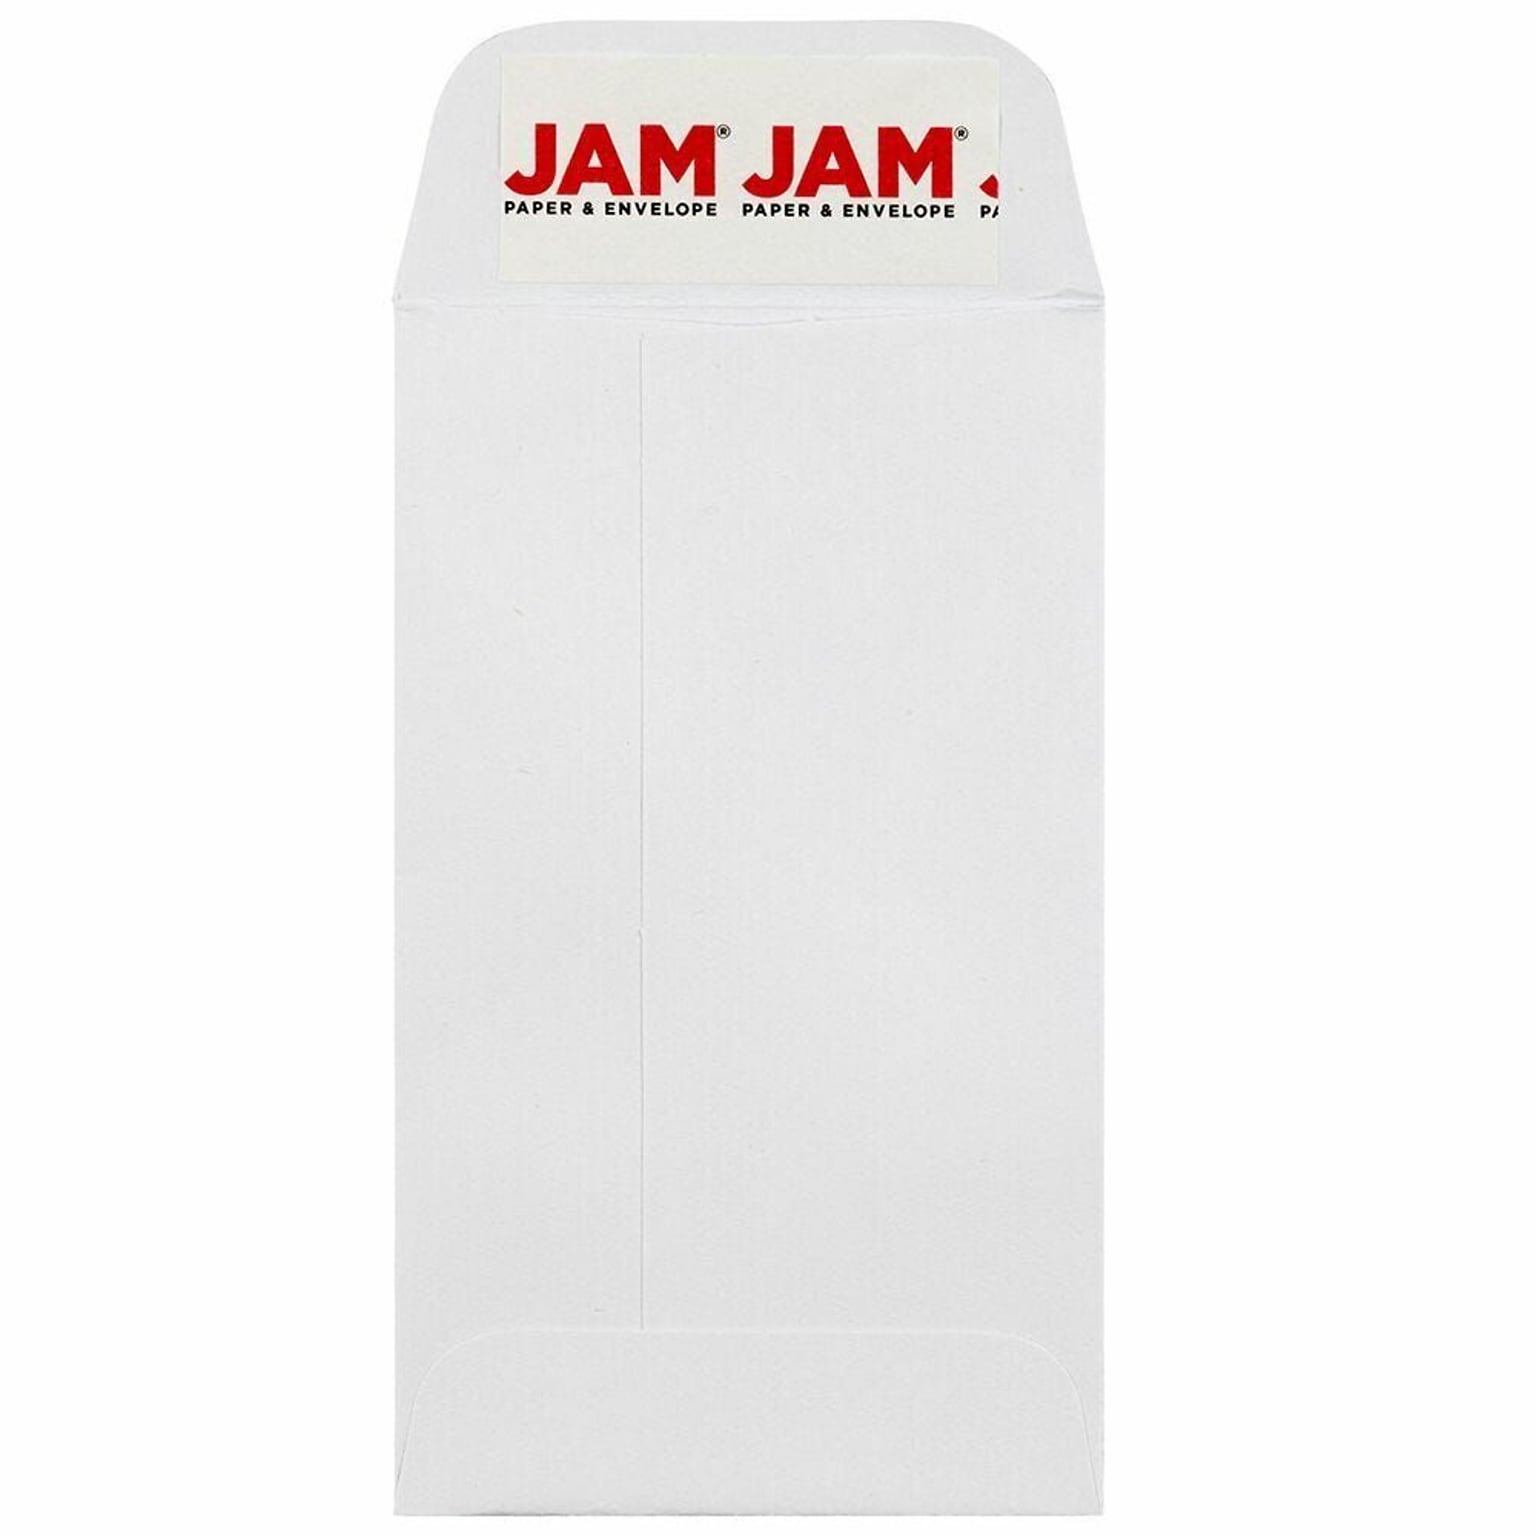 JAM PAPER Self Seal #3 Coin Business Envelopes, 2 1/2 x 4 1/4, White, 50/Pack (356838553I)